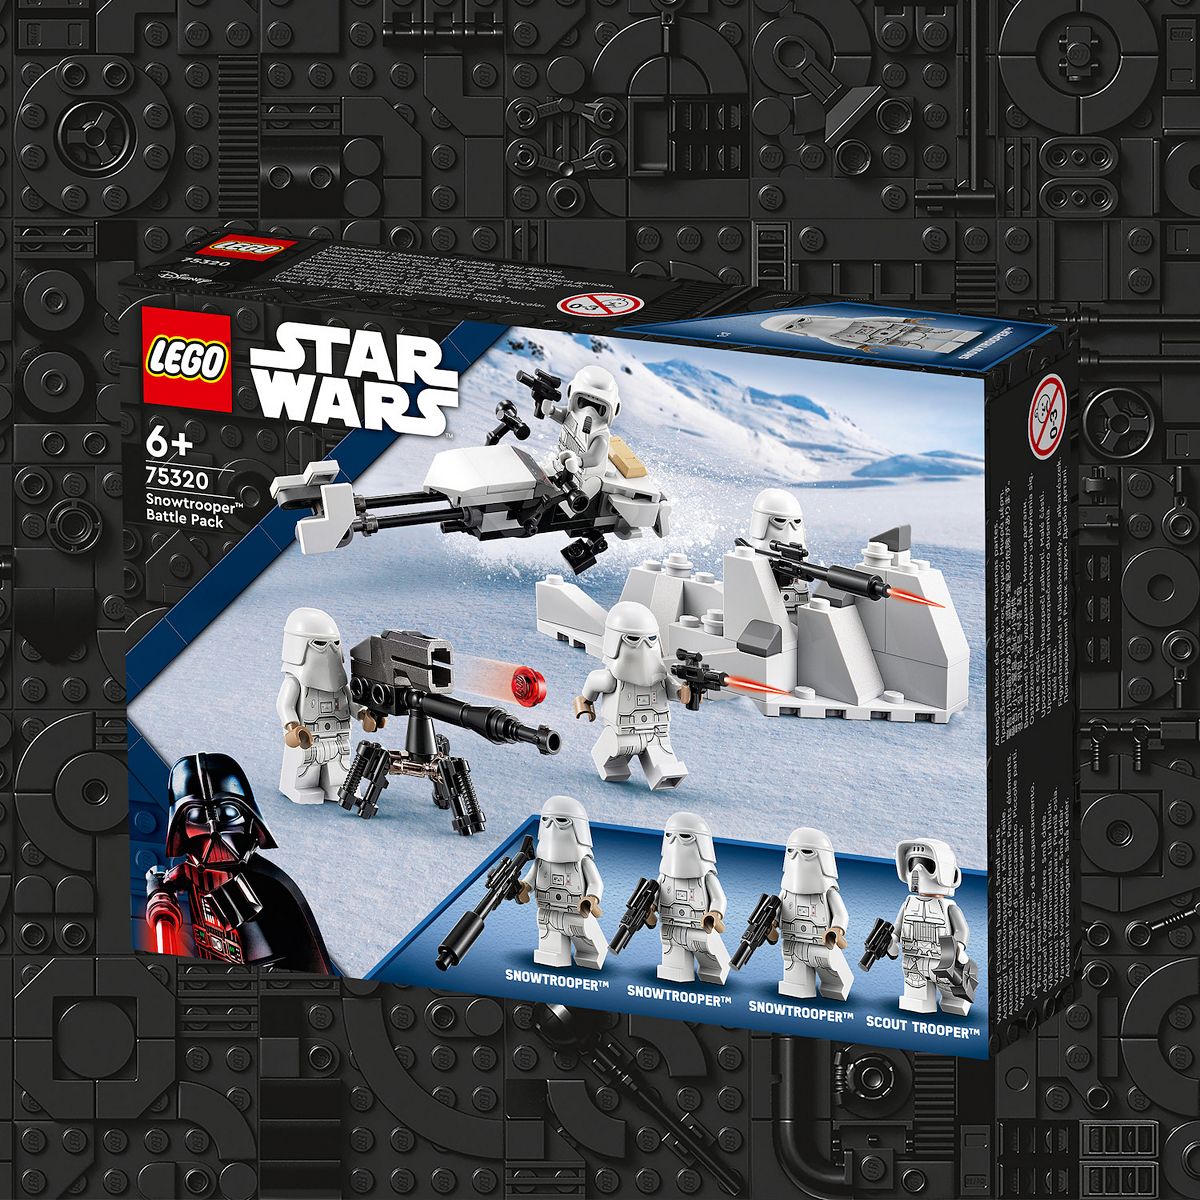 TESB Imperial Snowtrooper Battle Pack Lego set 2